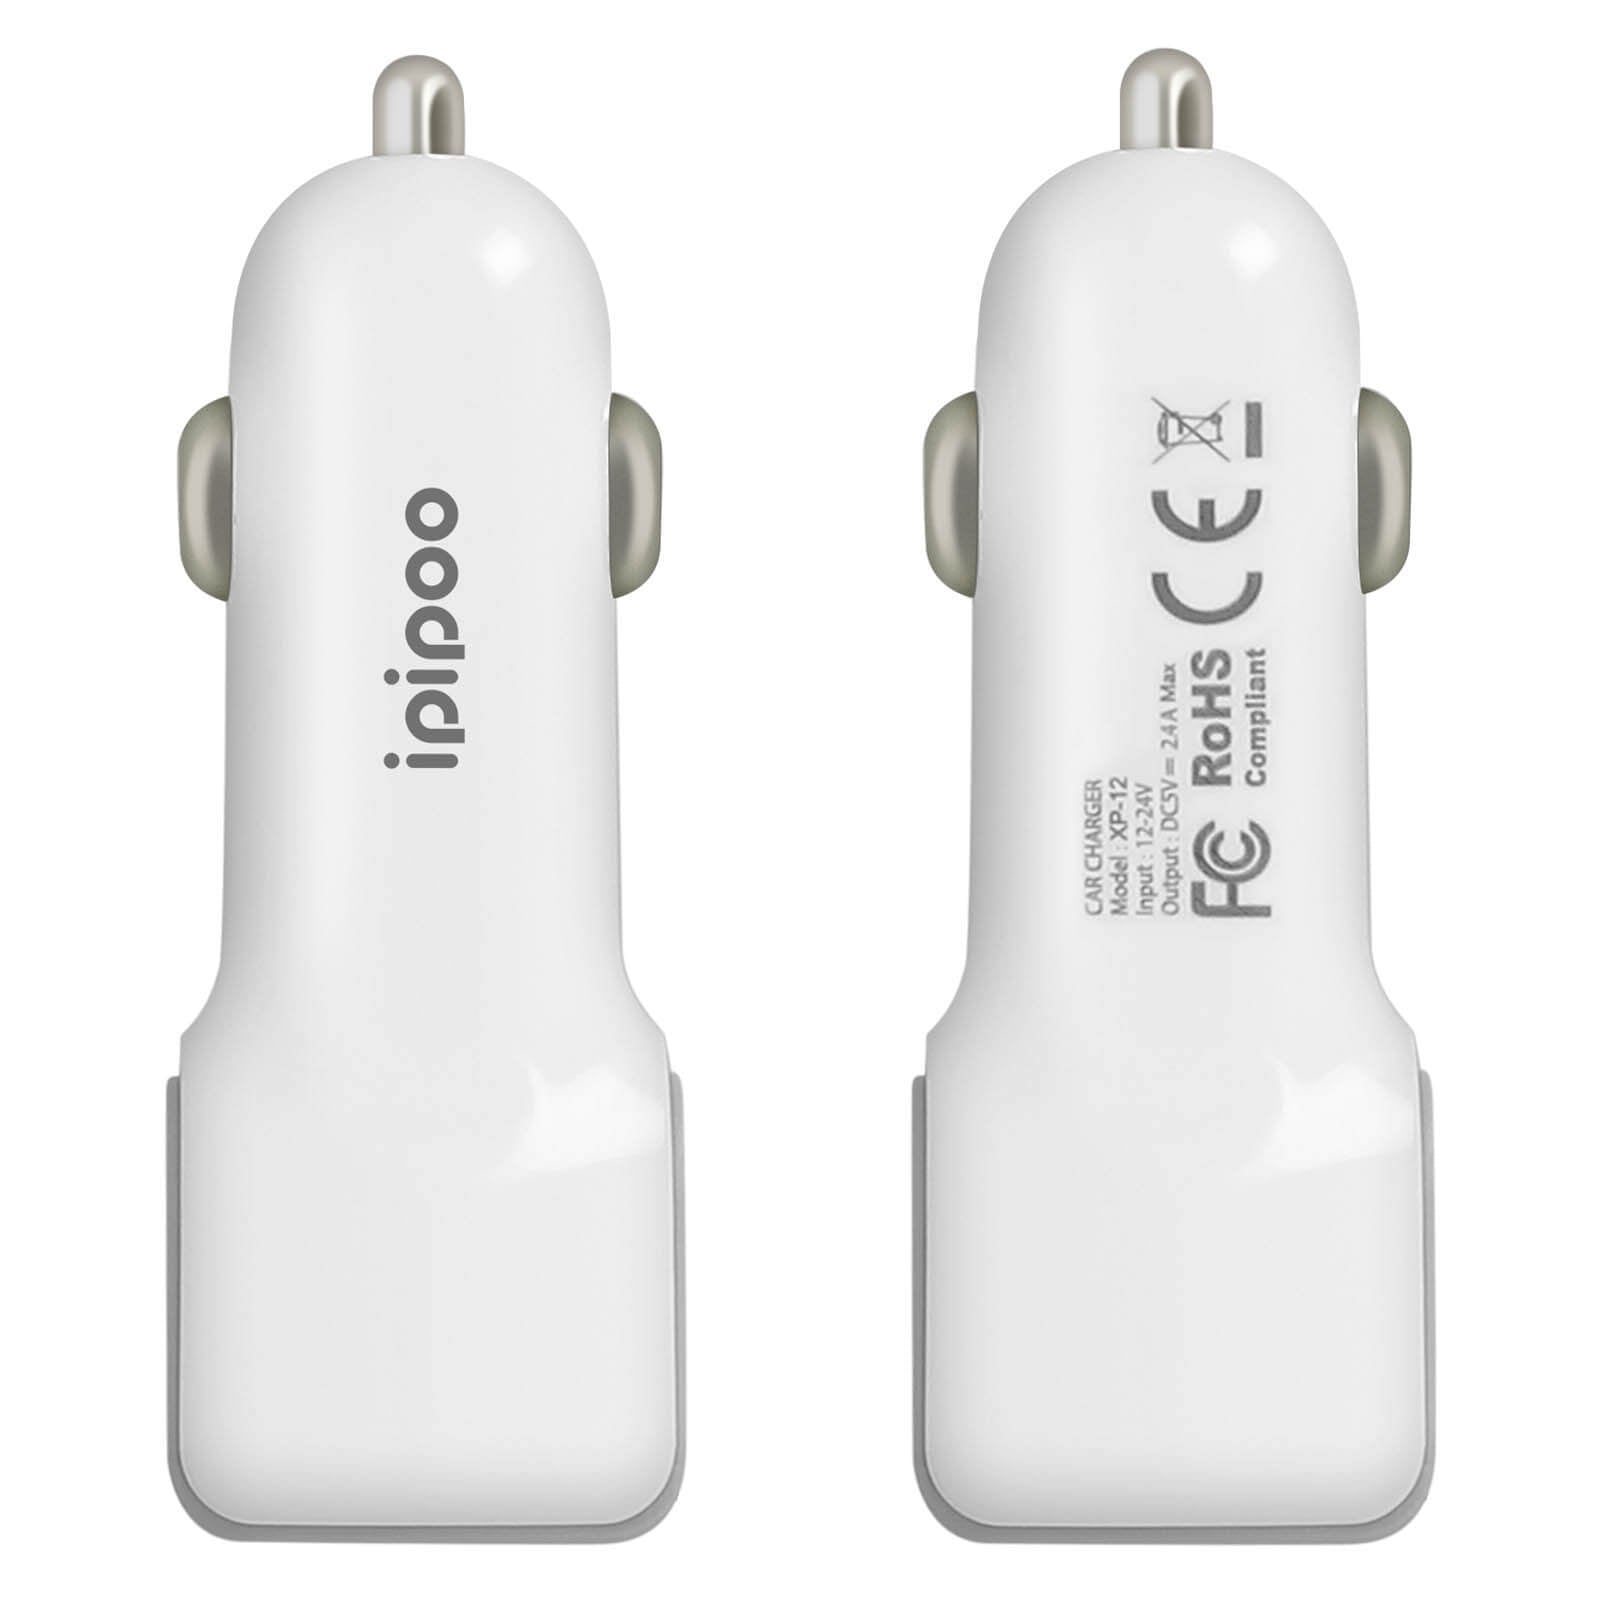 IPIPOO XP-12 Dual USB Car Fast Charging Charger